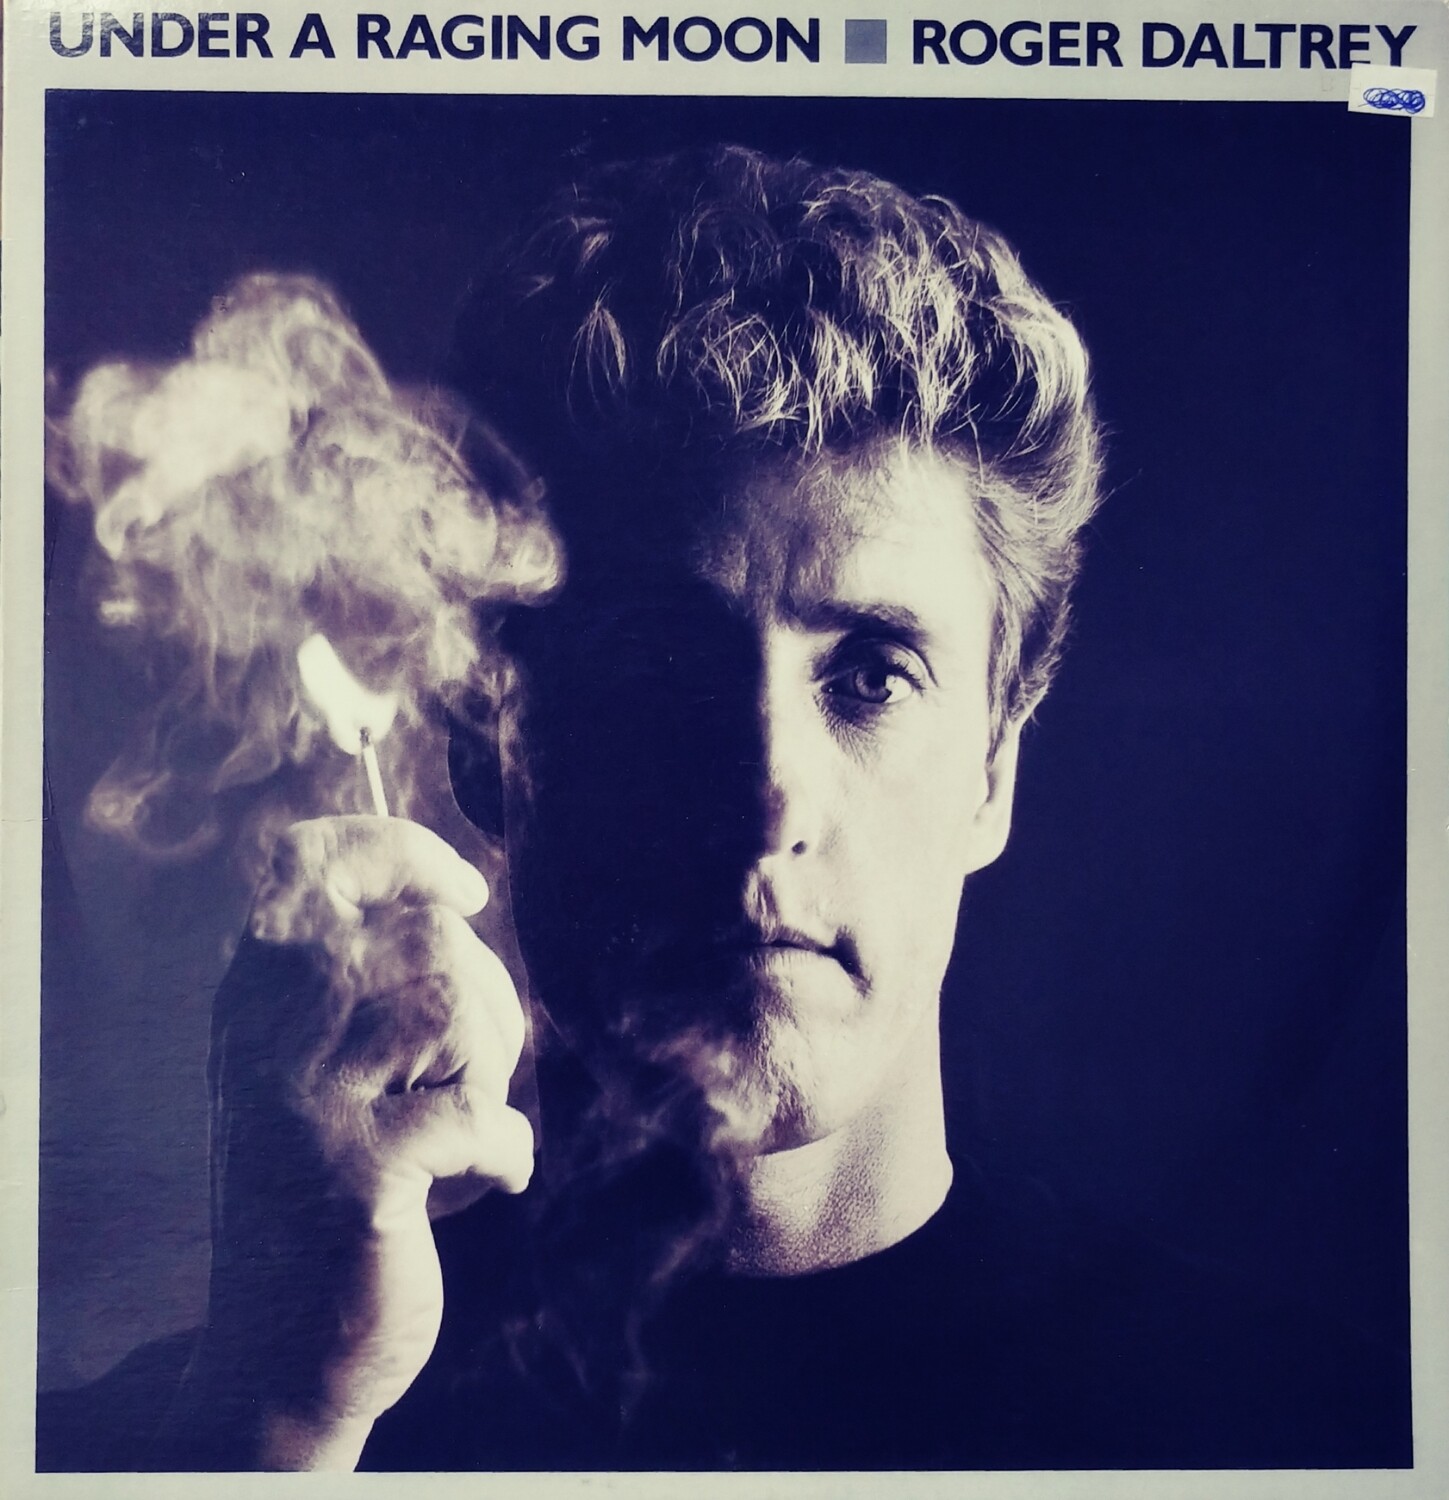 Roger Daltrey - Under a raging moon